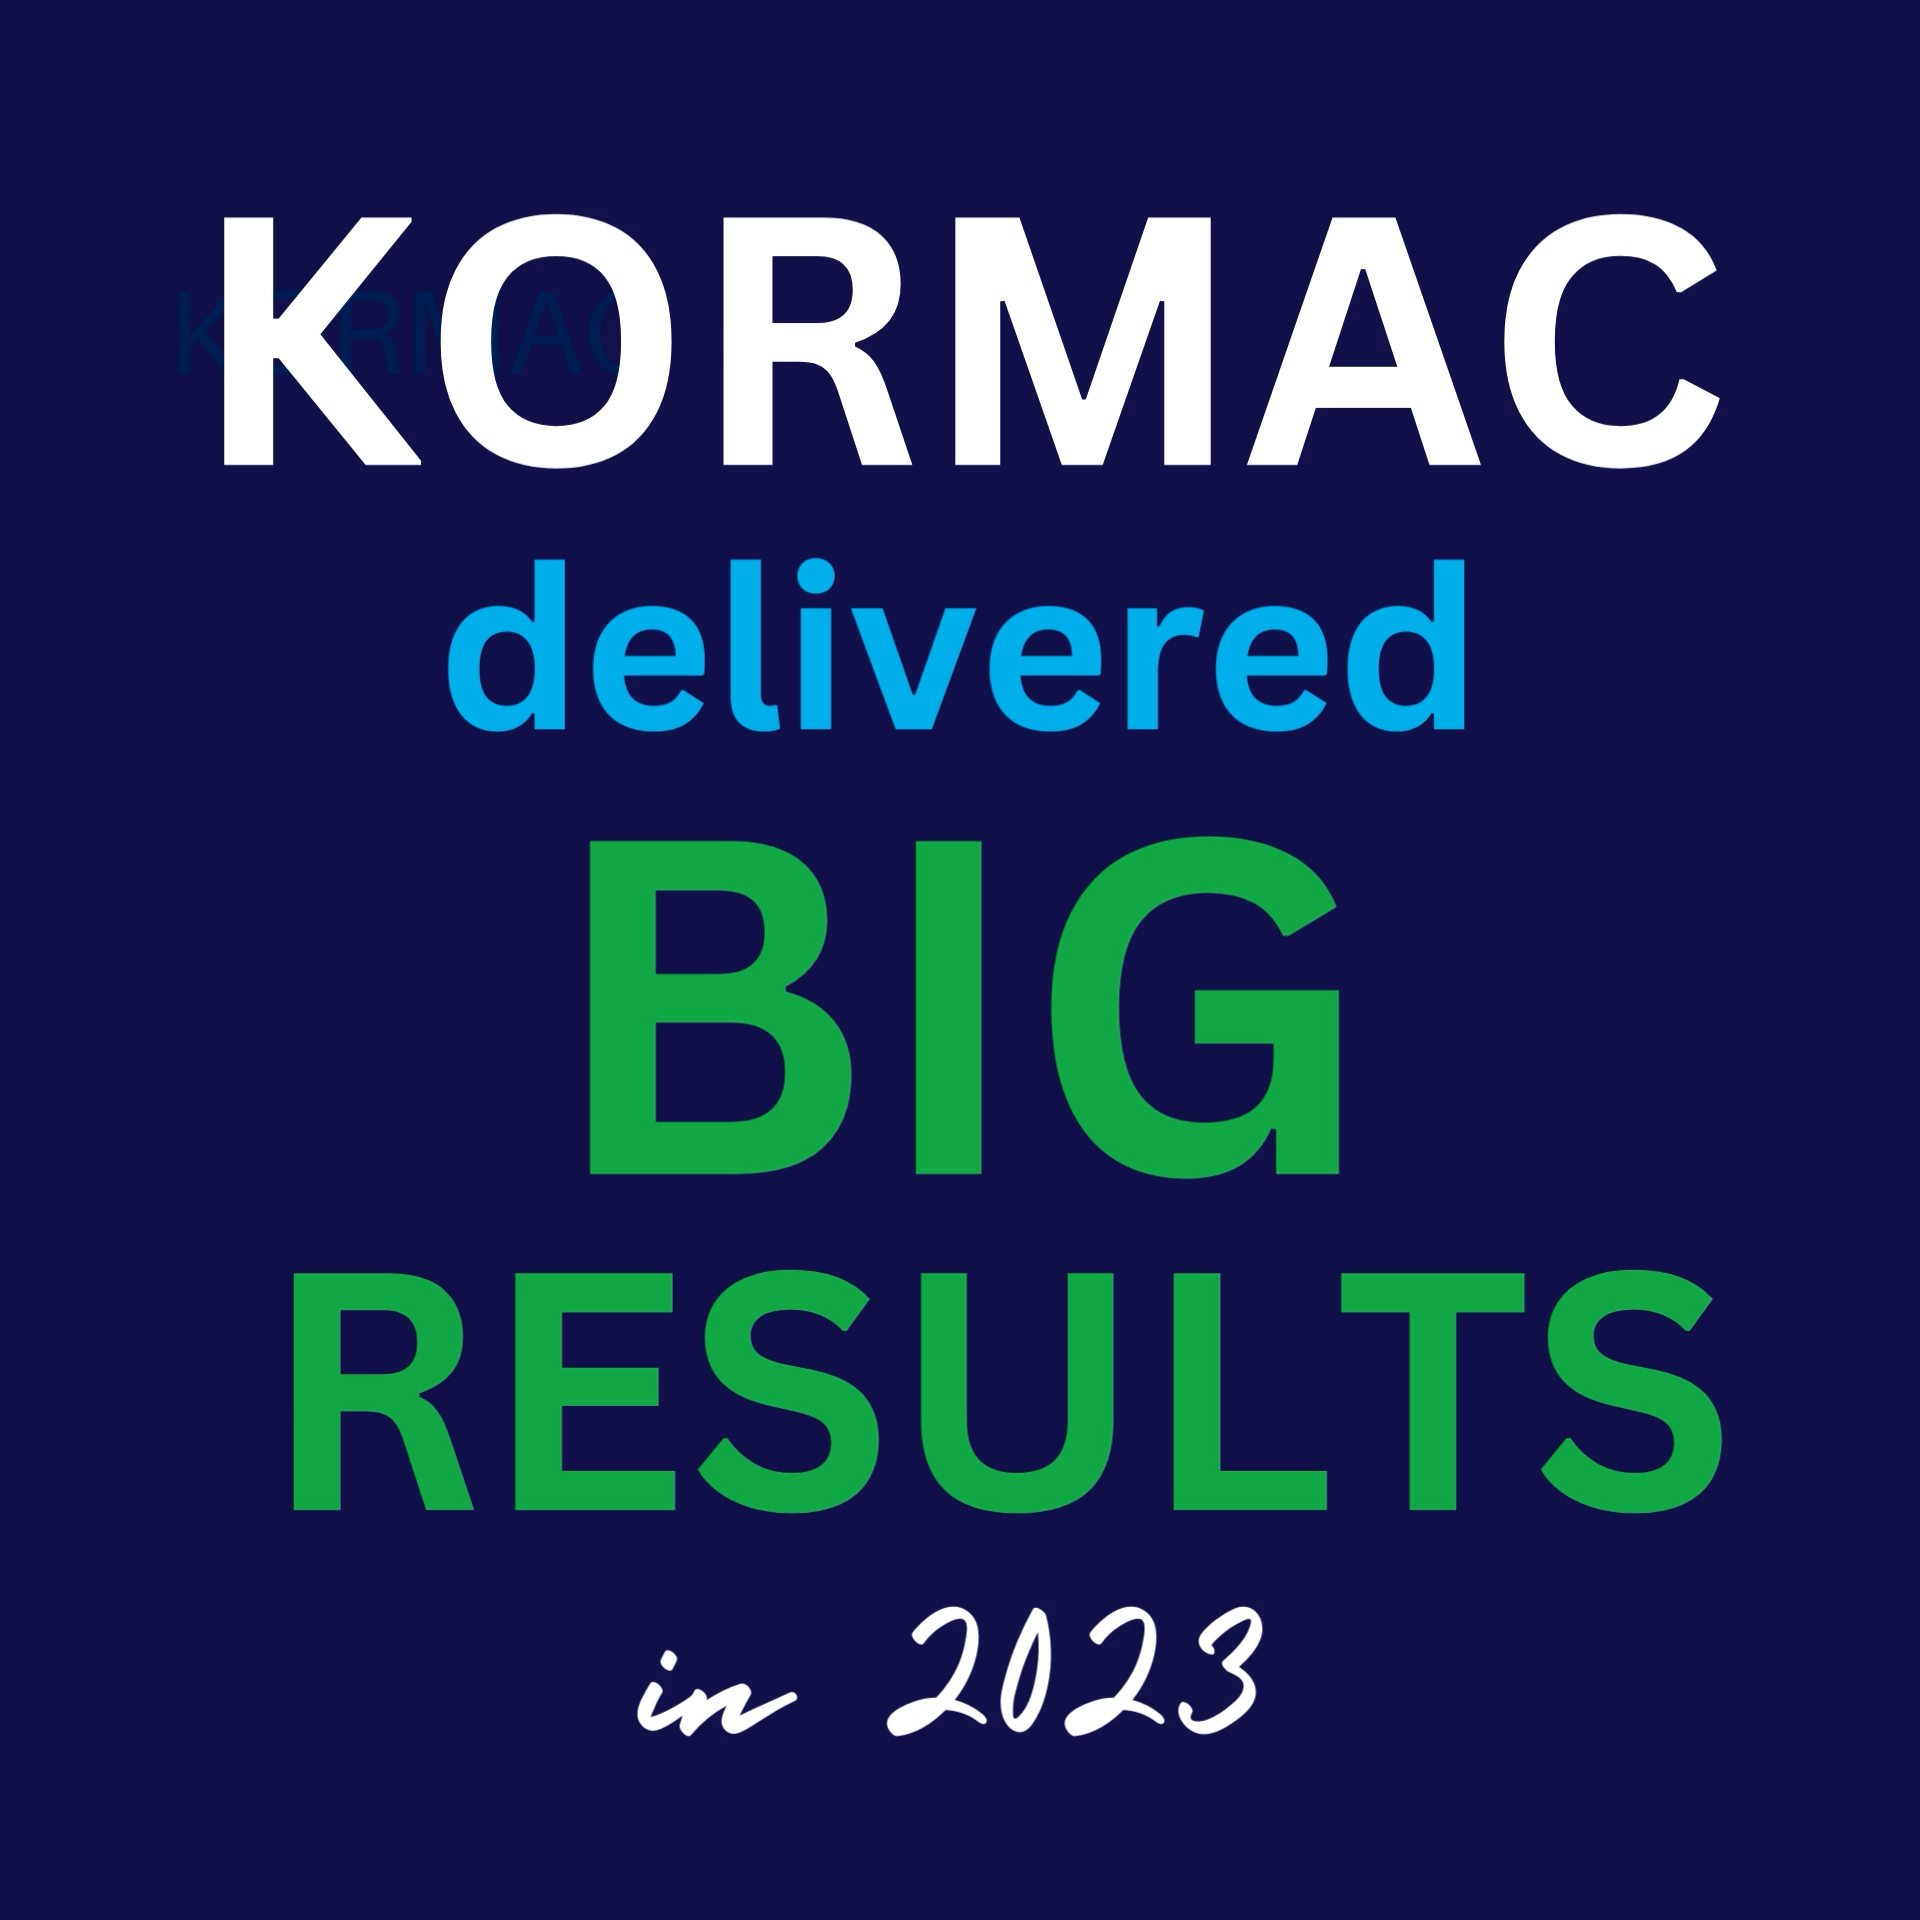 Kormac delivered BIG RESULTS in 2023